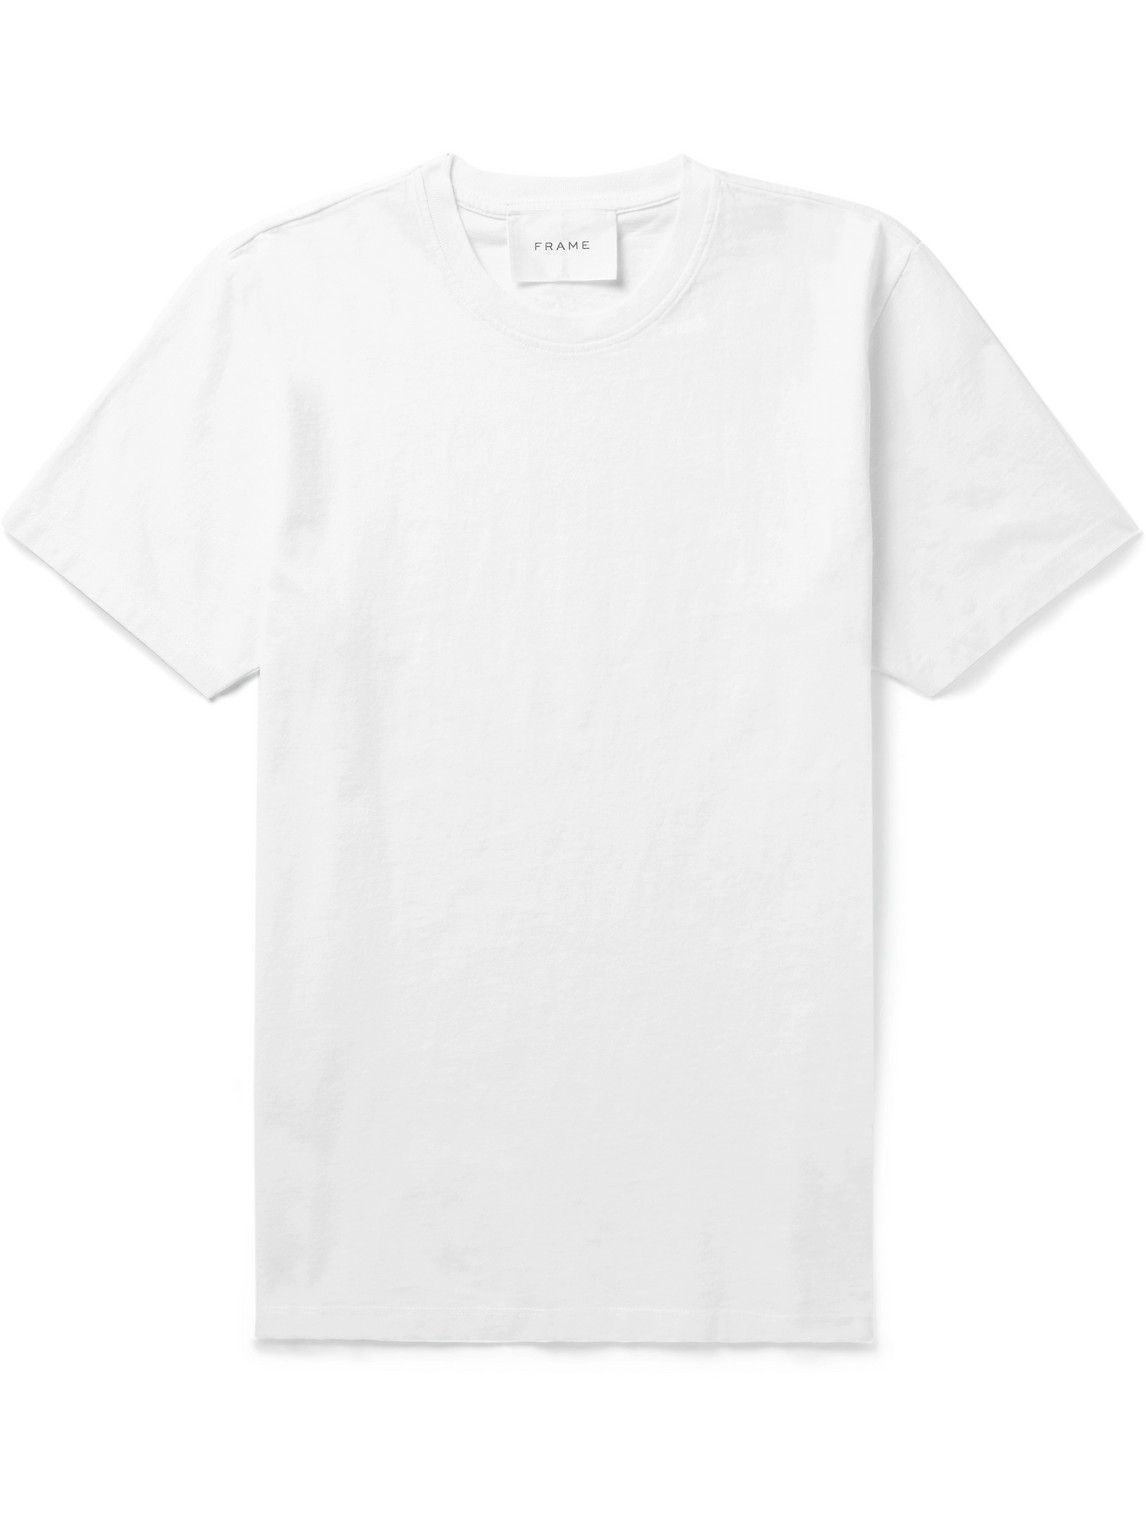 FRAME - Cotton-Jersey T-Shirt - White Frame Denim